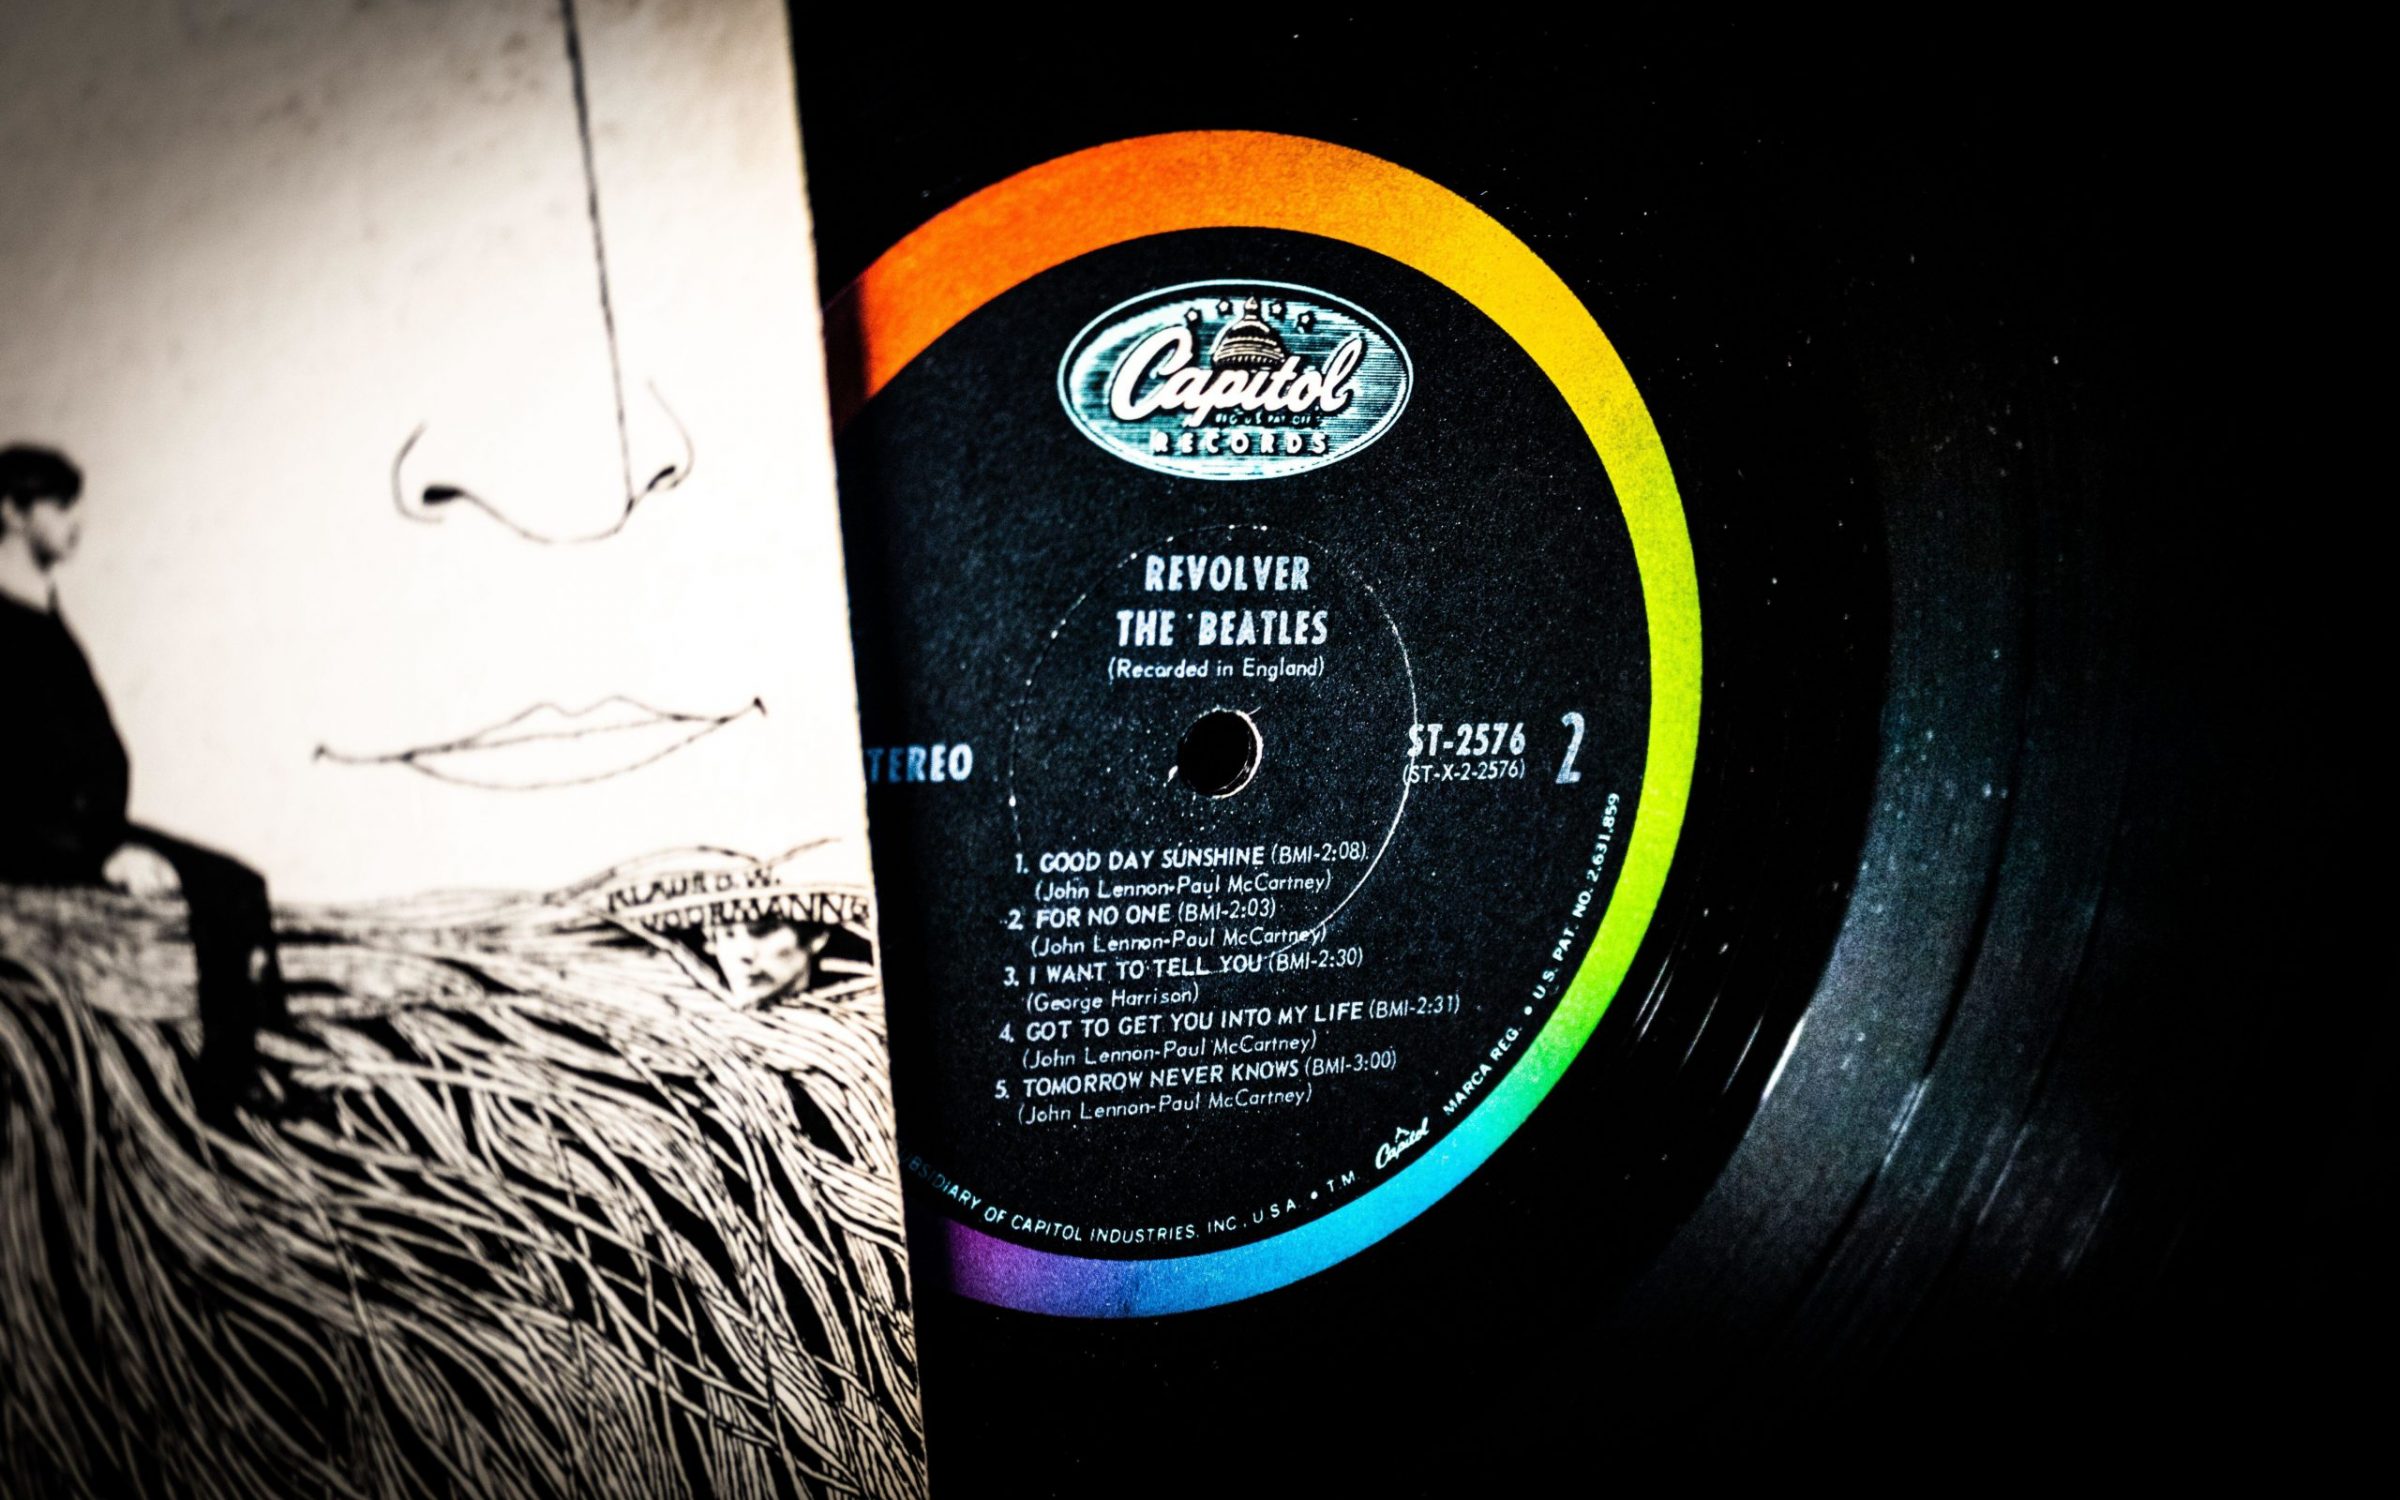 Closeup of label on The Beatles Revolver vinyl record